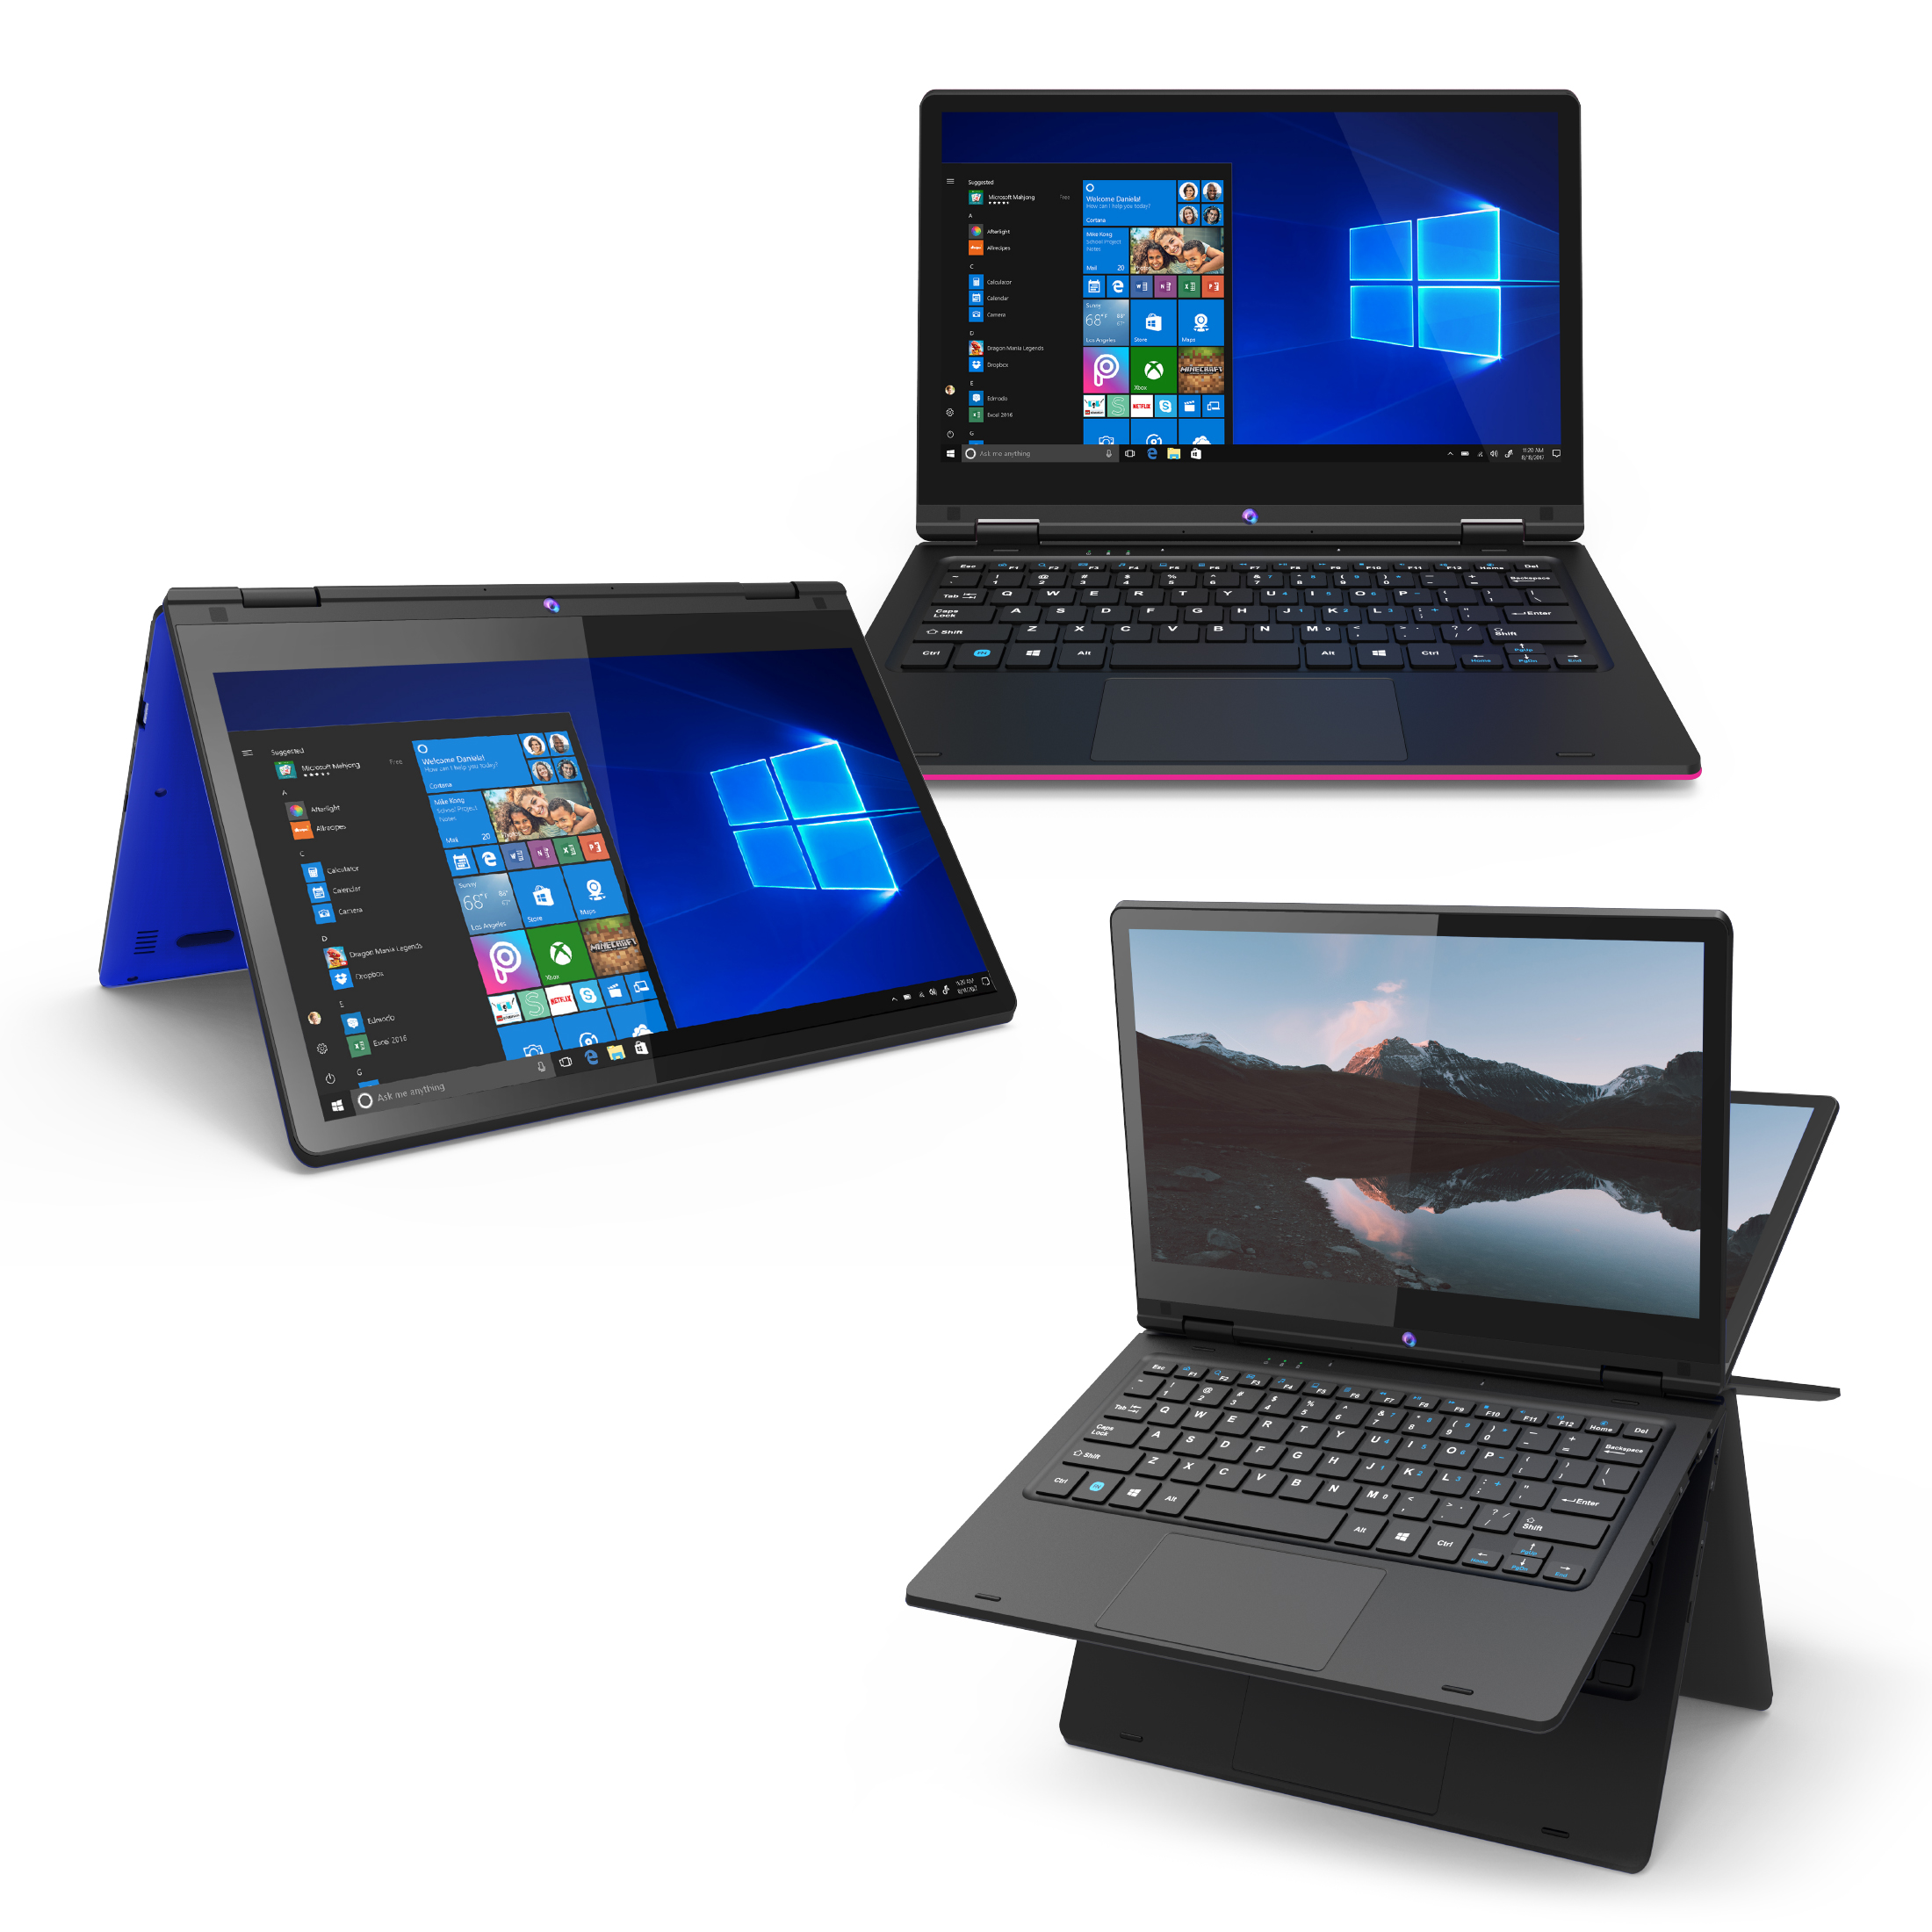 Core Innovations 11.6" 720p Touchscreen Laptop, Intel Celeron N3350, 4GB RAM, 64GB HD, Windows 10, Pink, CLT1164PN - image 1 of 11